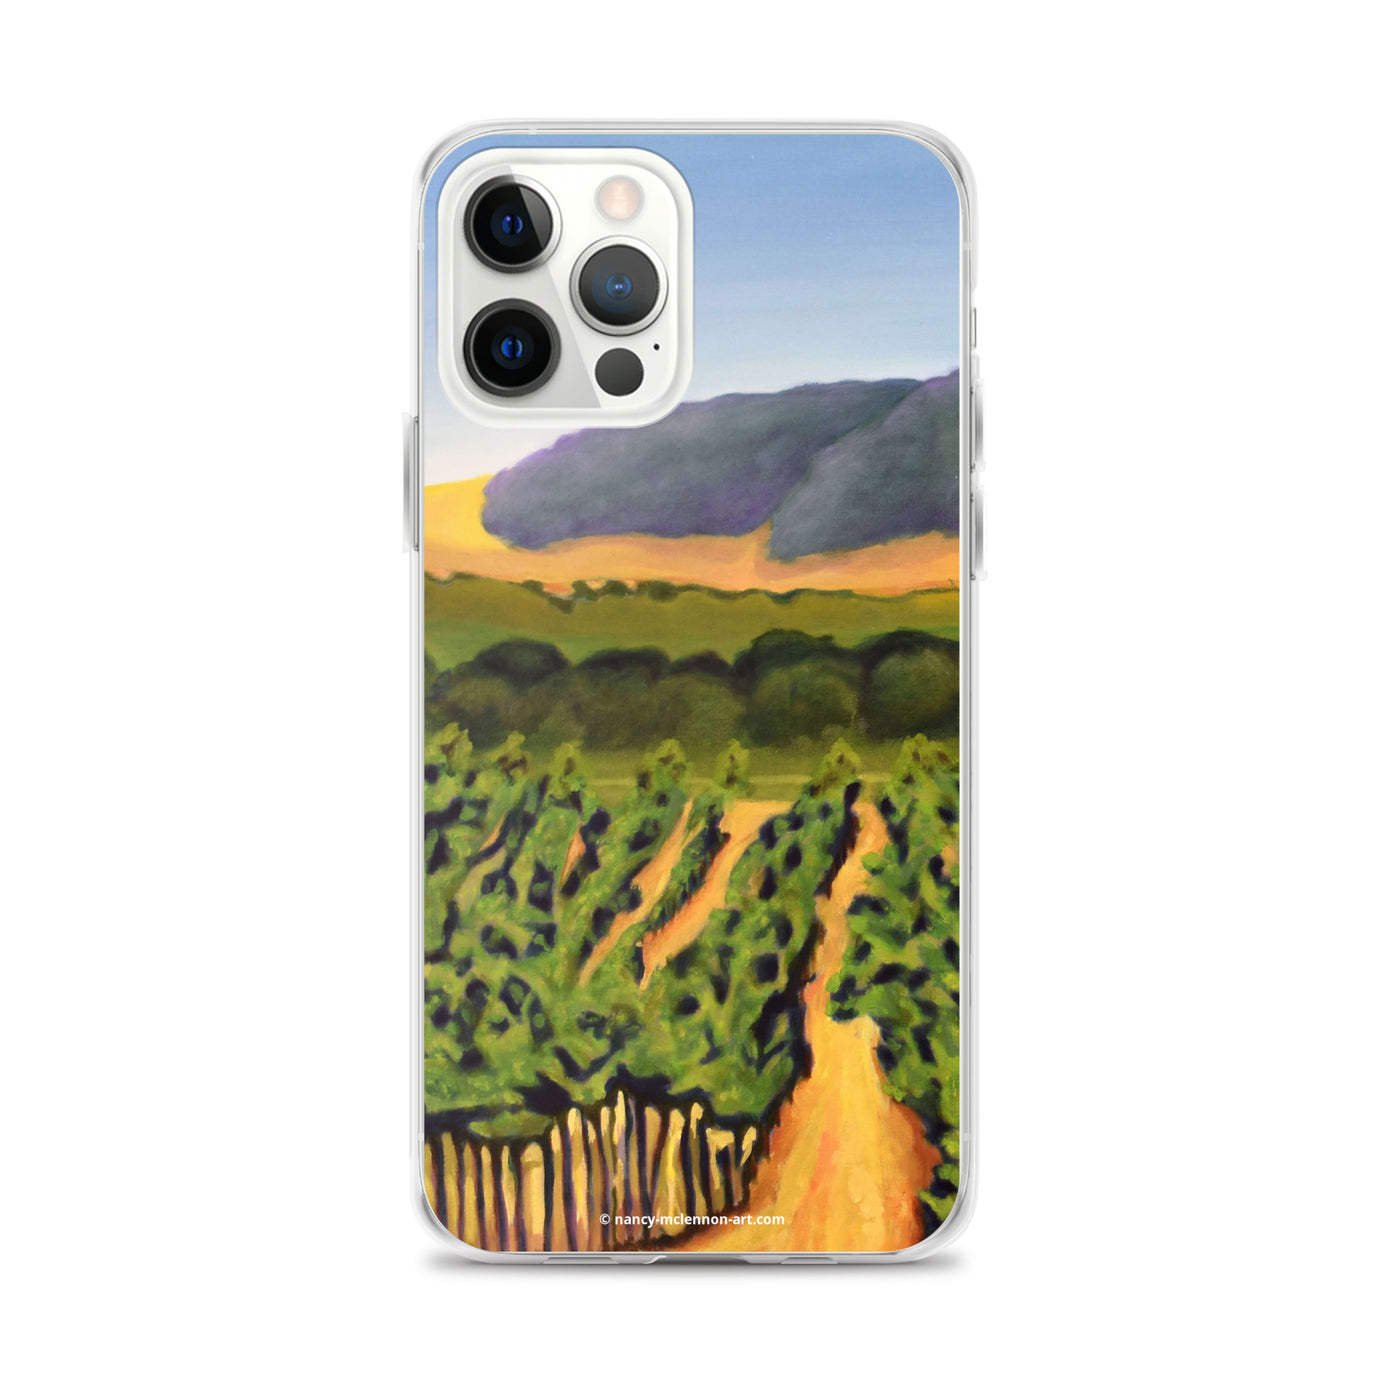 iPhone® Case - Lush purple vineyard in golden hills